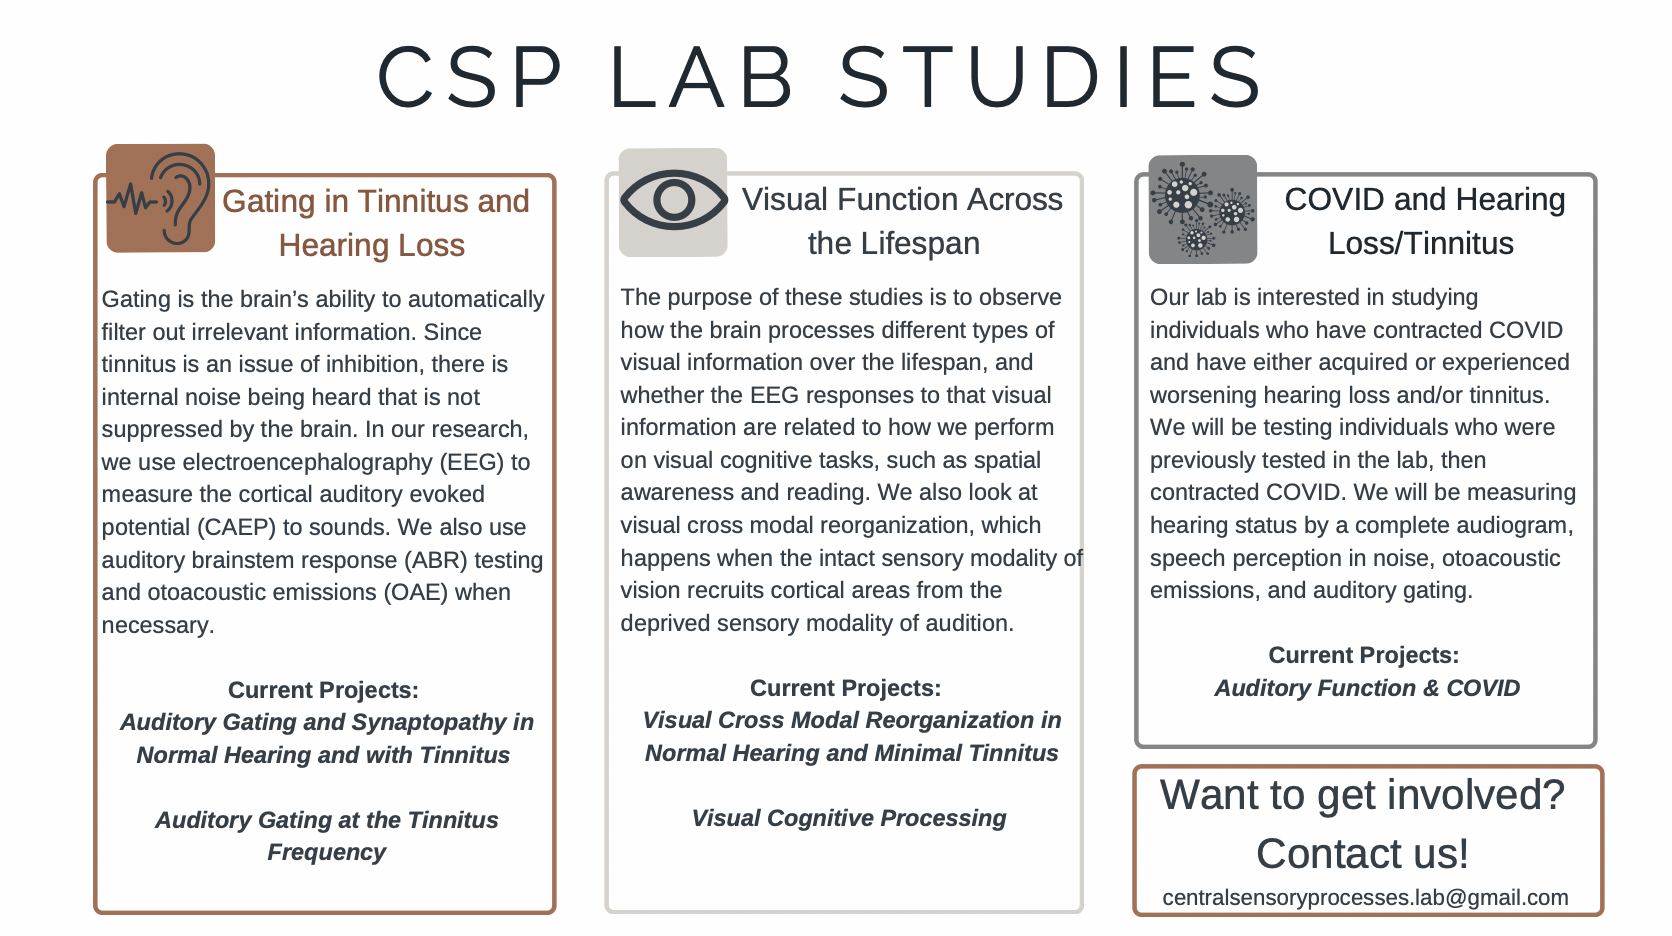 image with descriptions of current lab studies